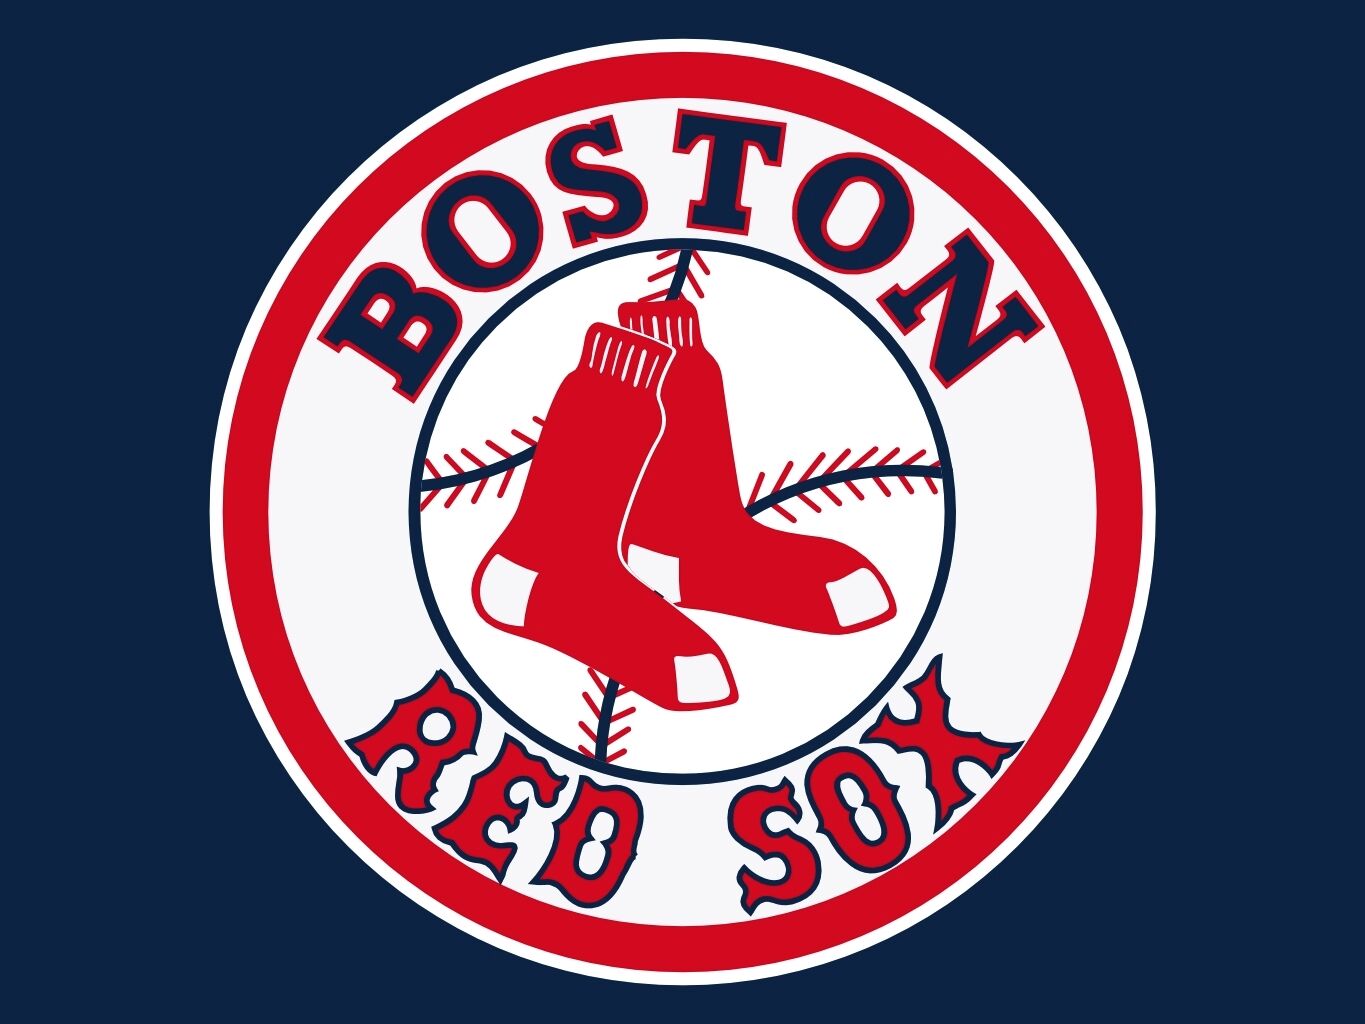 Boston Red Sox, Major League Sports Wiki